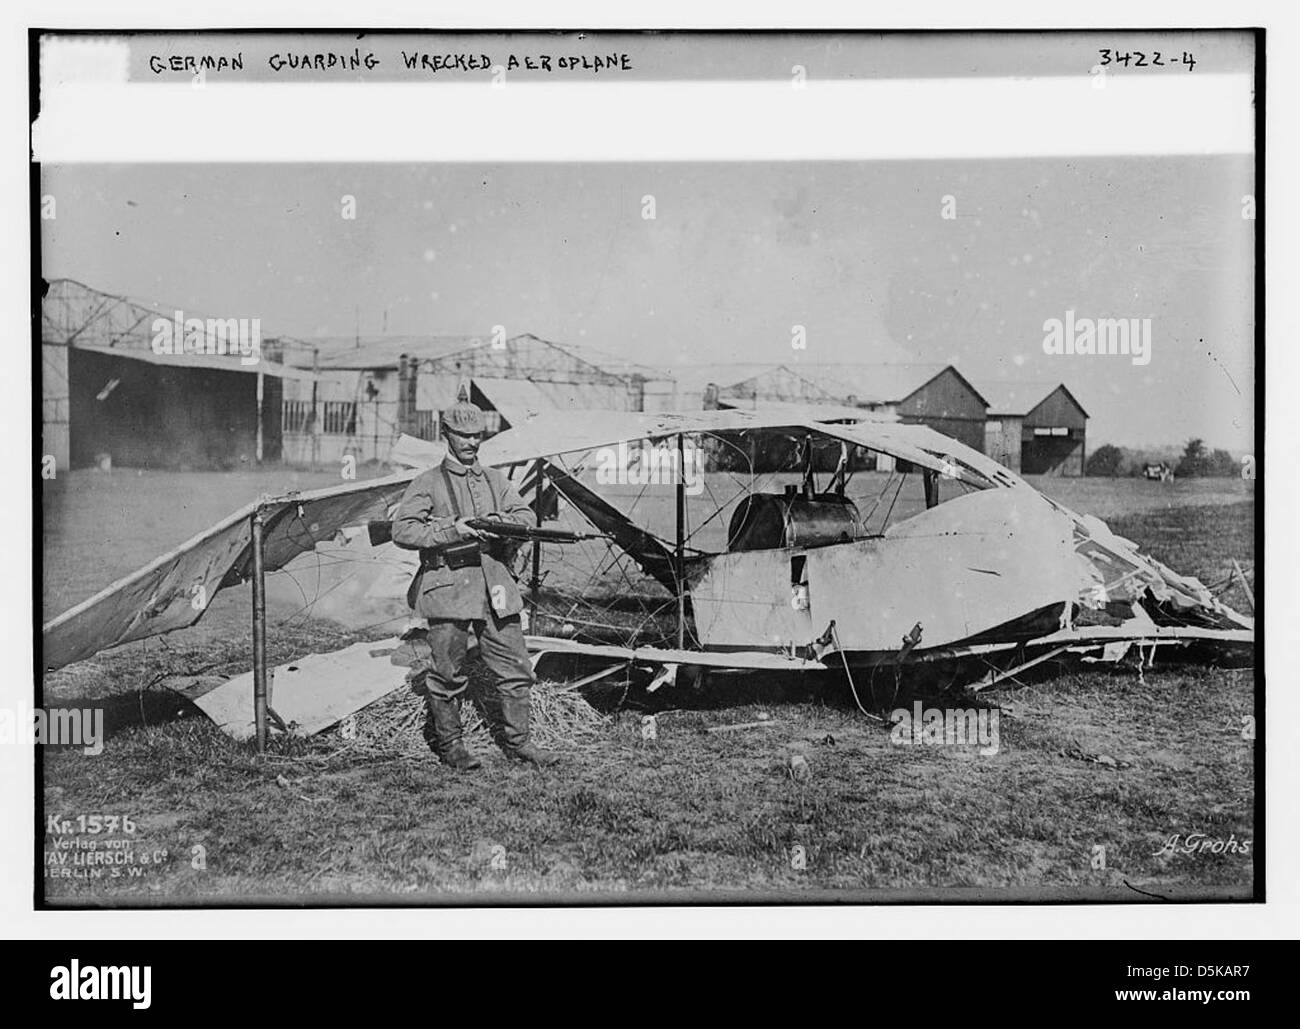 German guarding wrecked aeroplane (LOC) Stock Photo